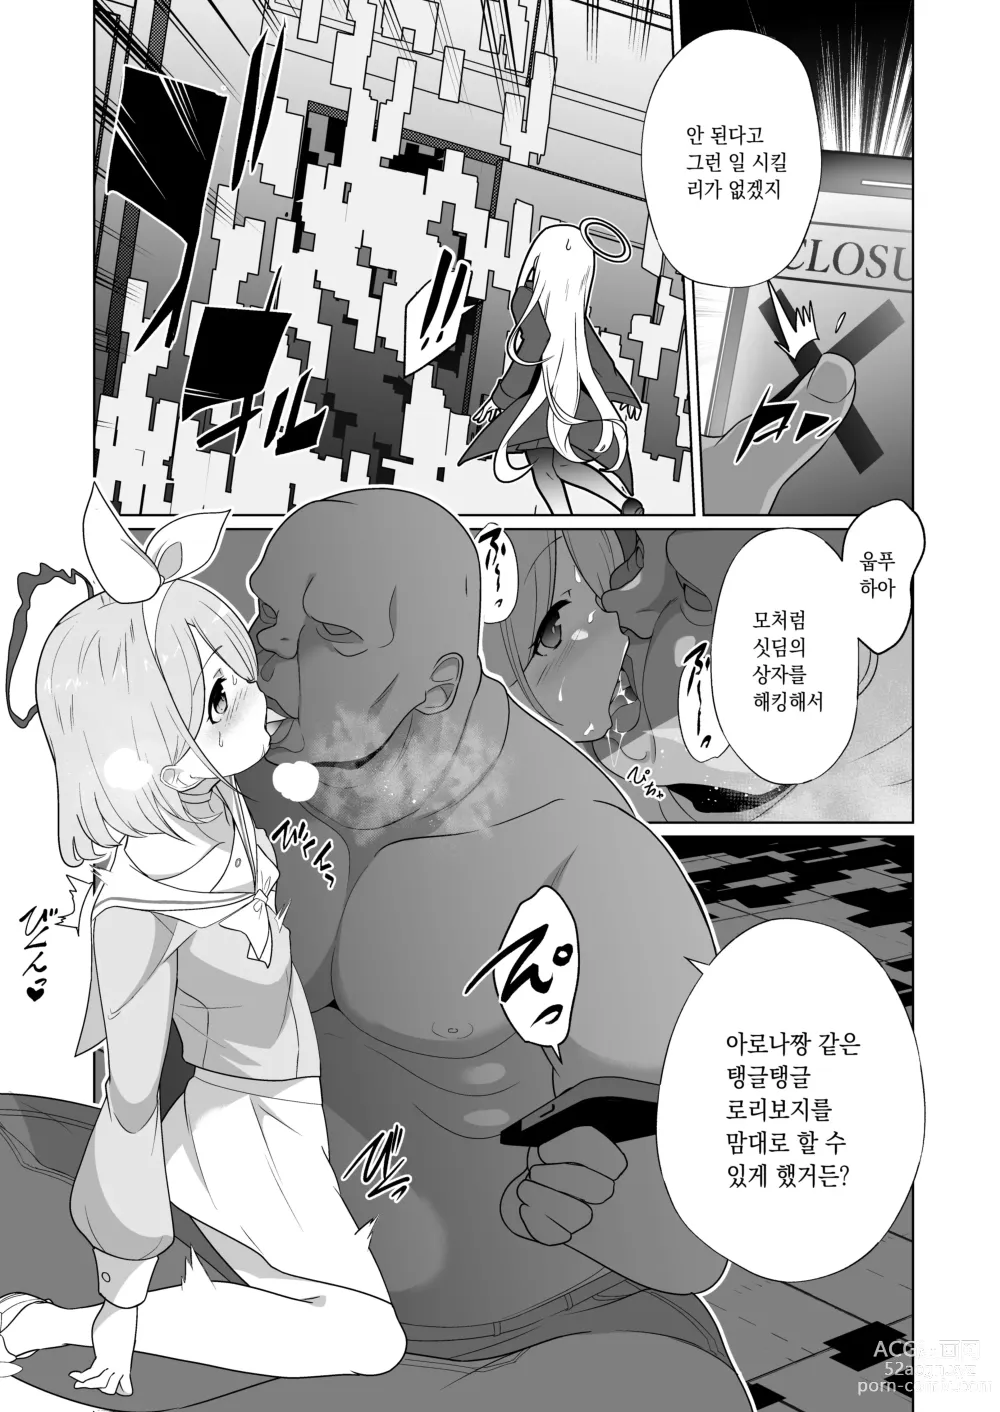 Page 6 of doujinshi 싫어하는 프라나가 기꺼이 봉사하는 이야기